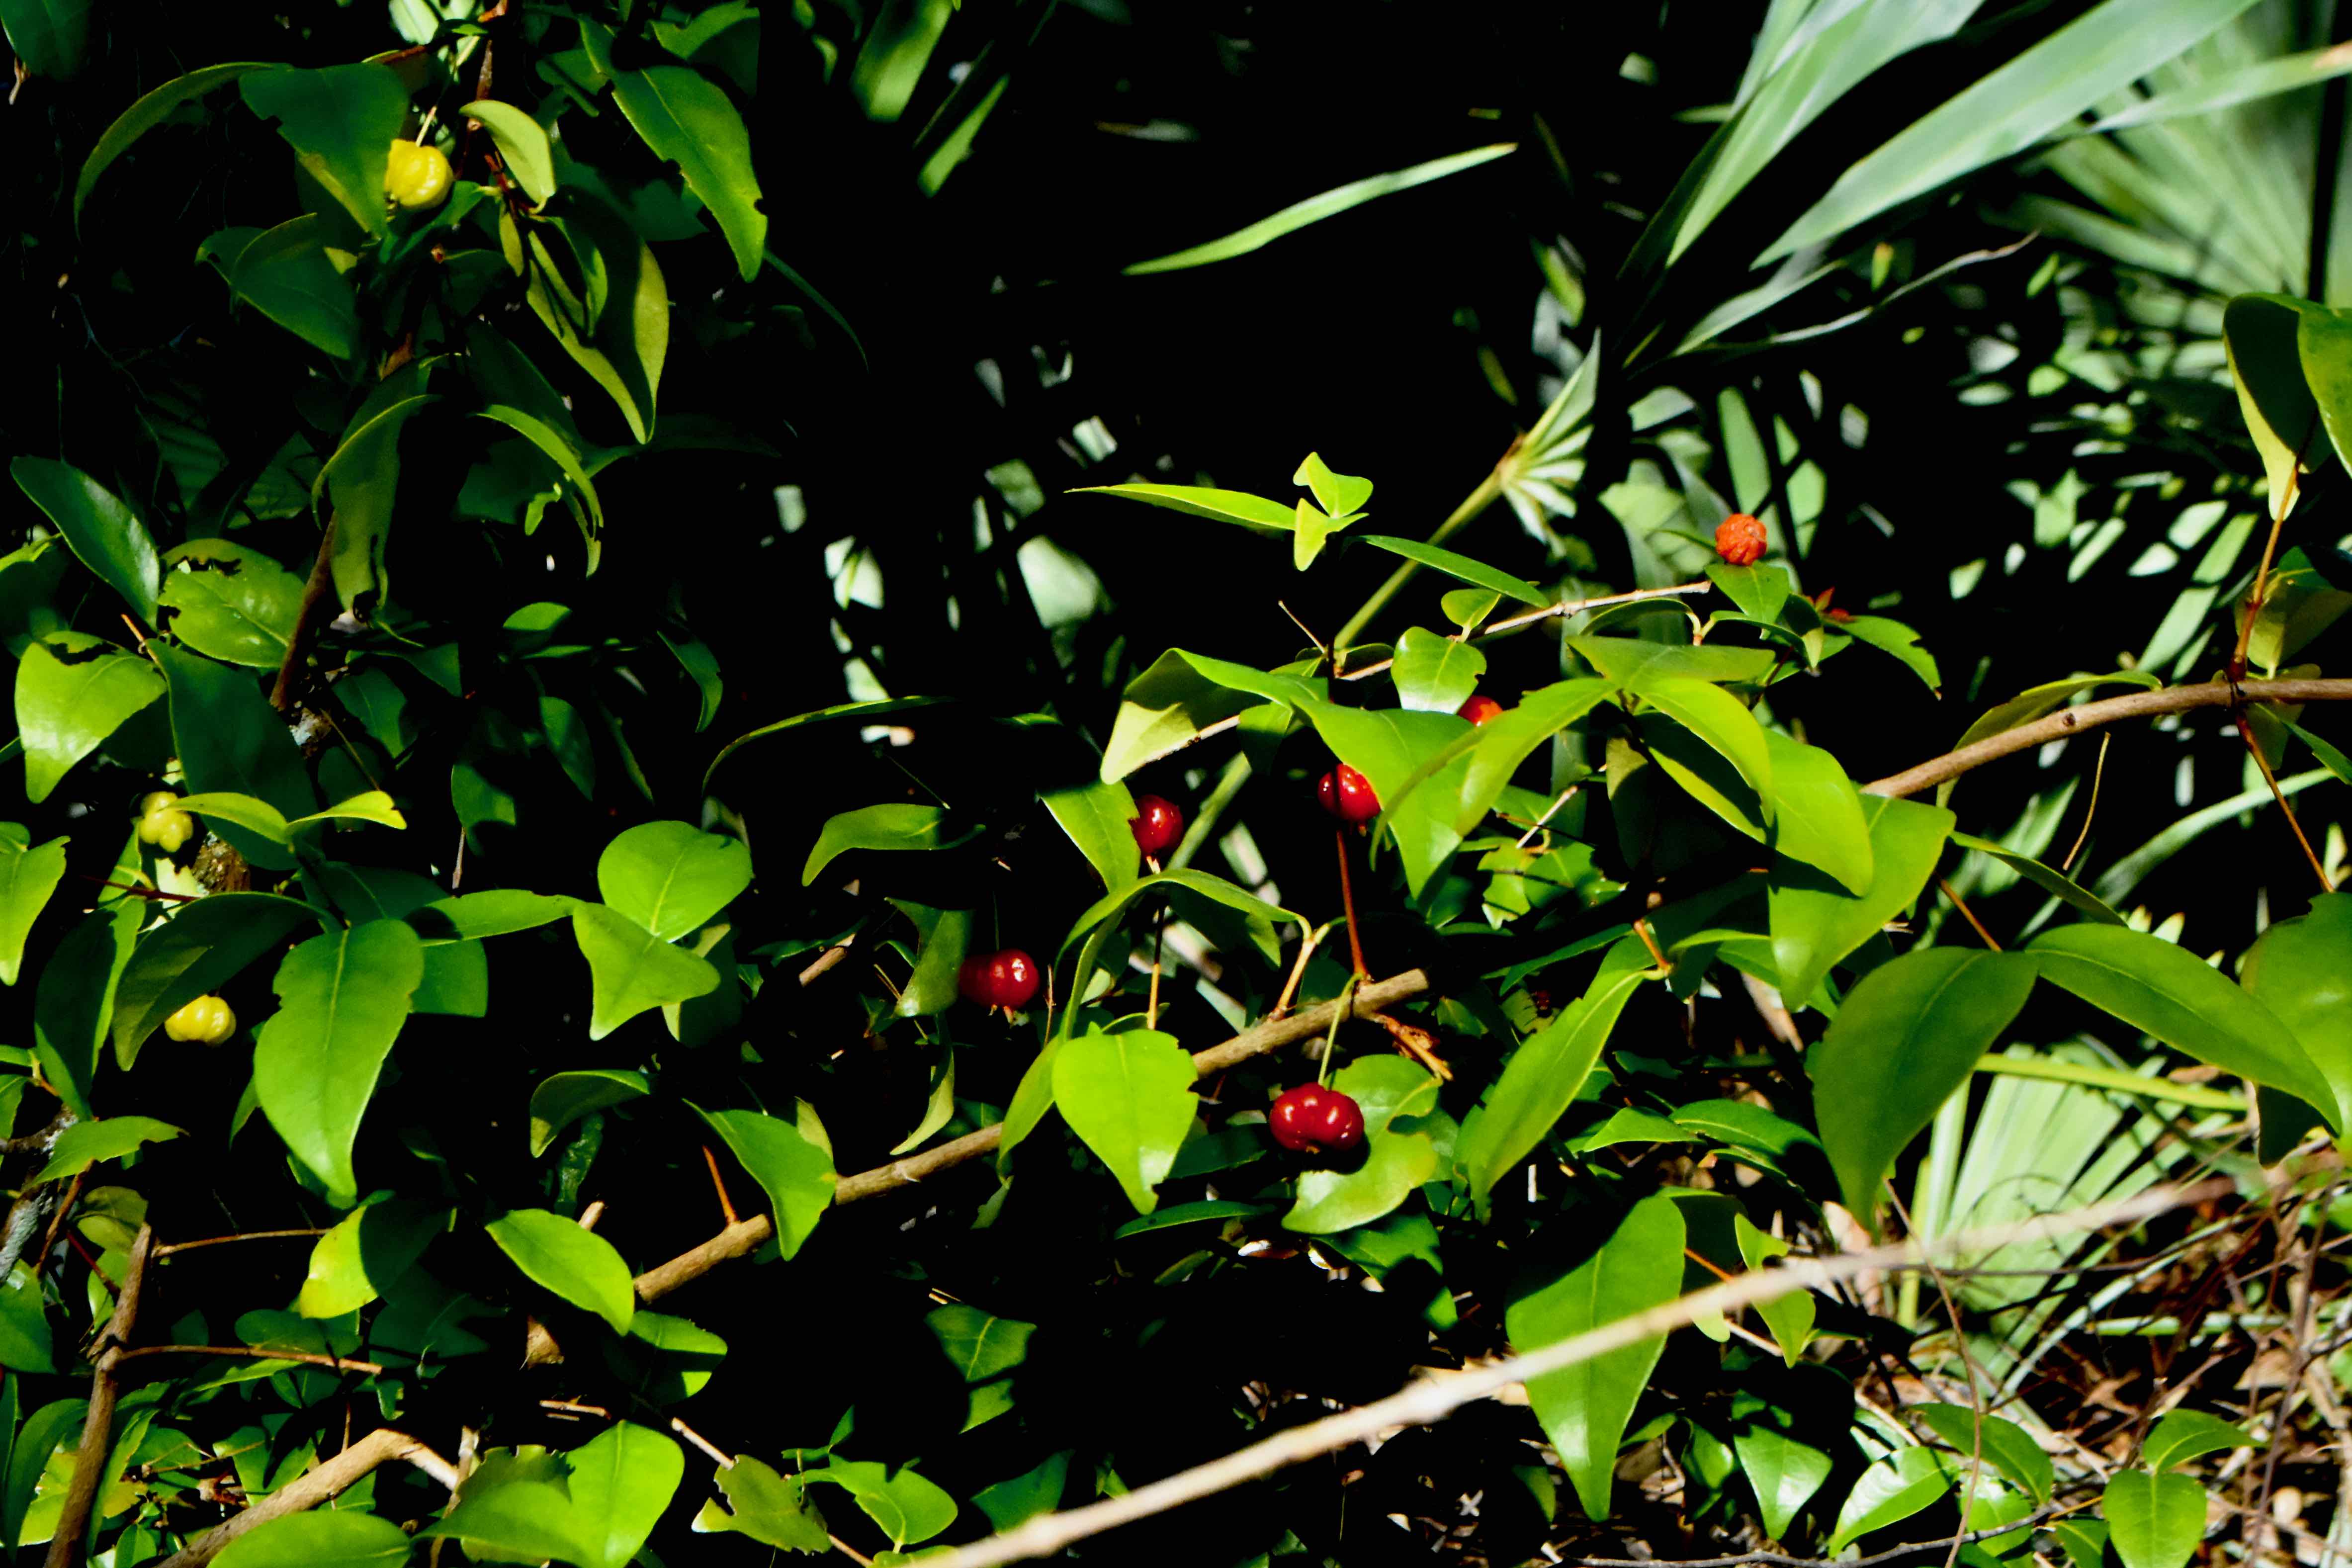 Surinam cherry